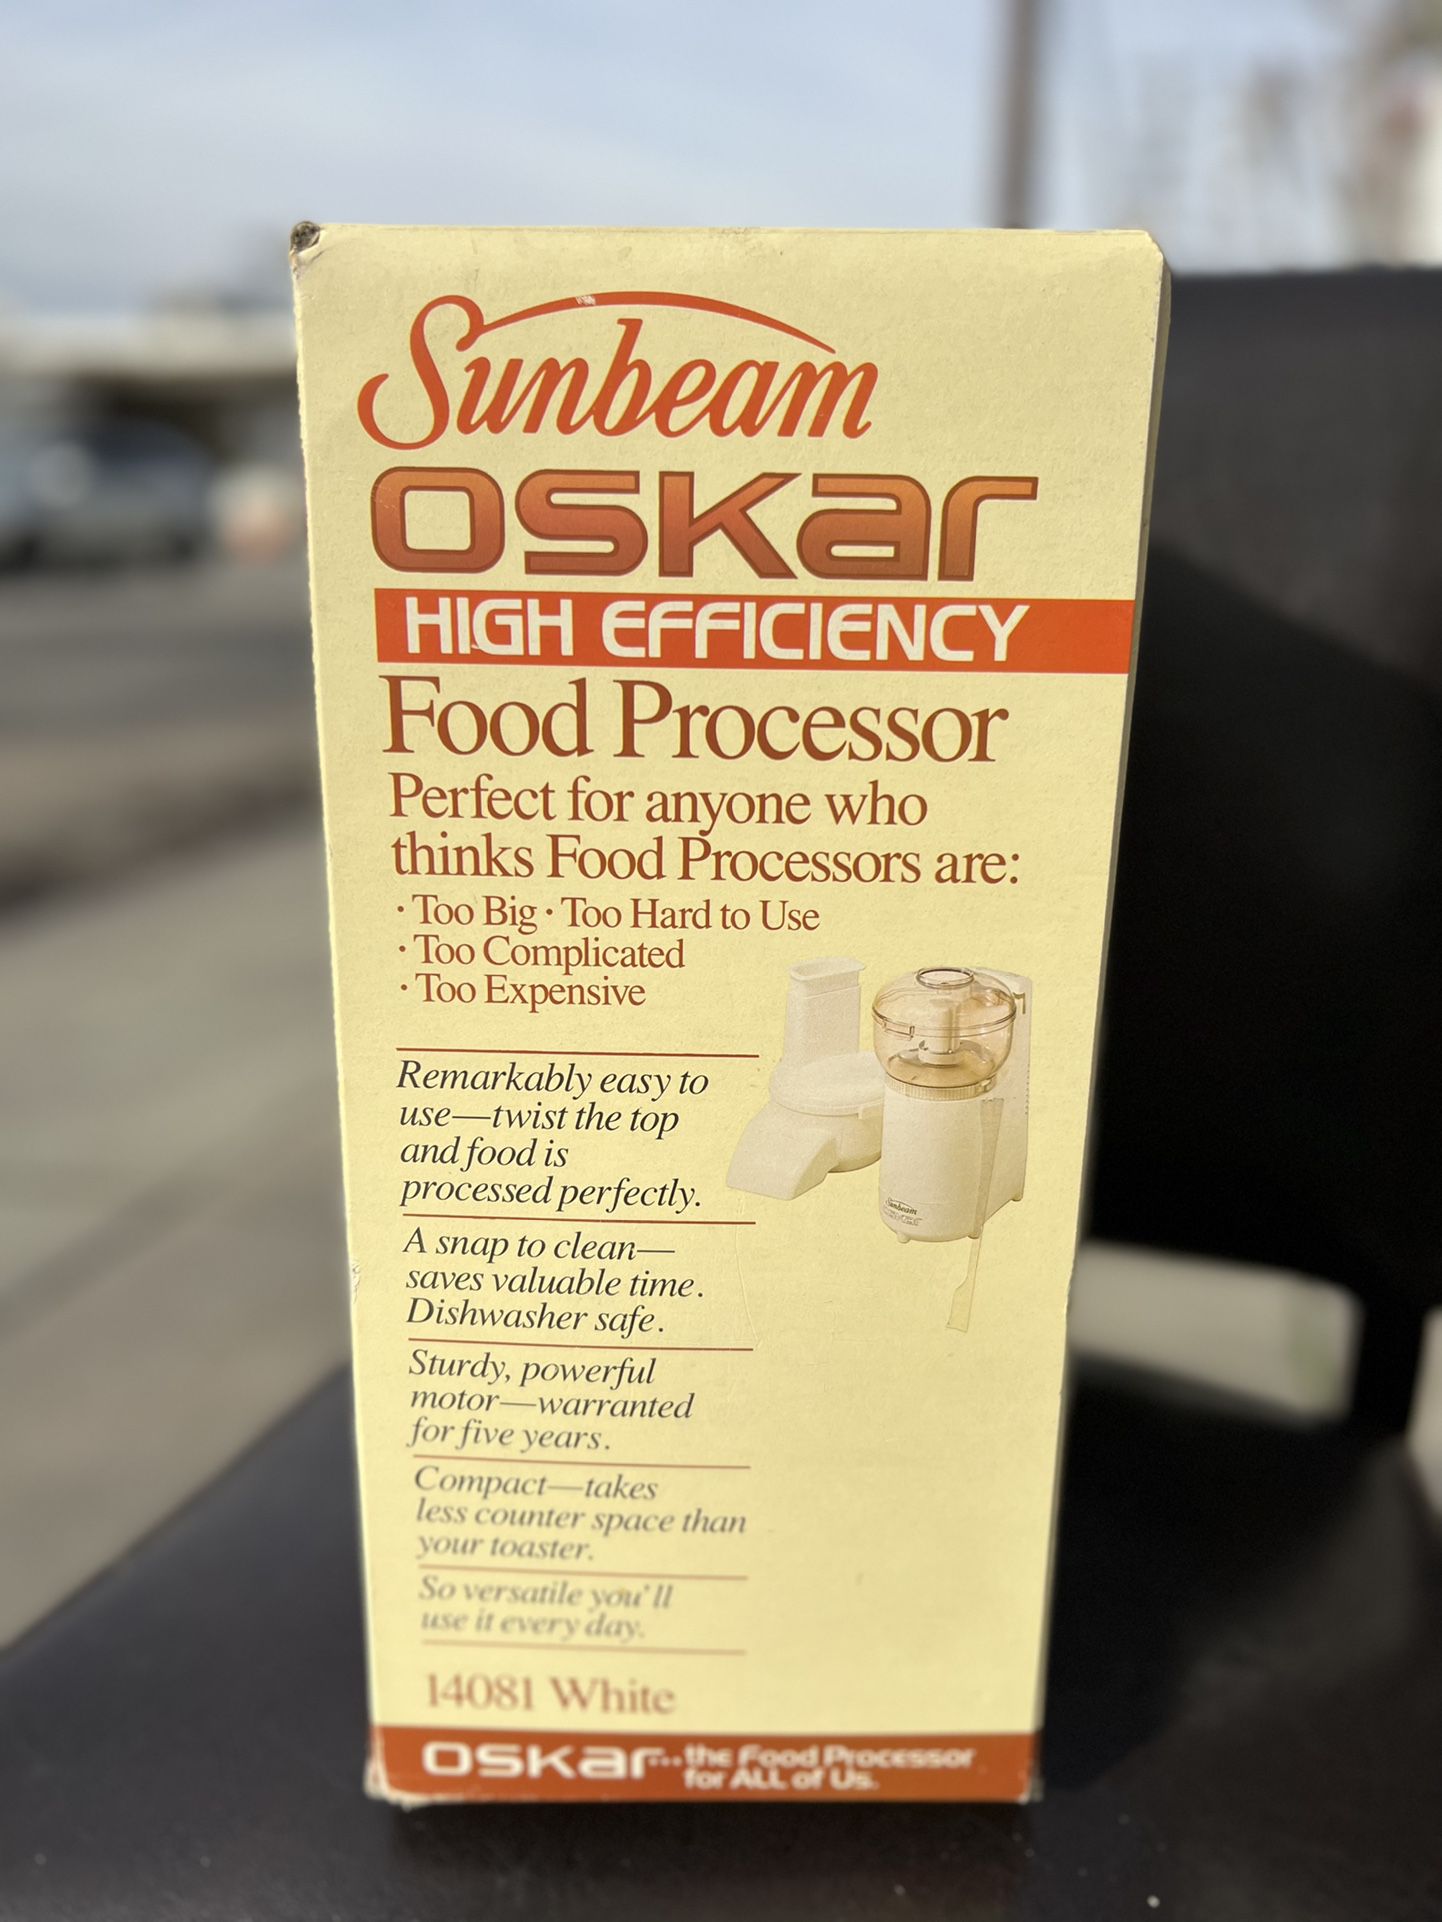 Sunbeam OSKAR Food Processor Model 14081 - Good Working Condition